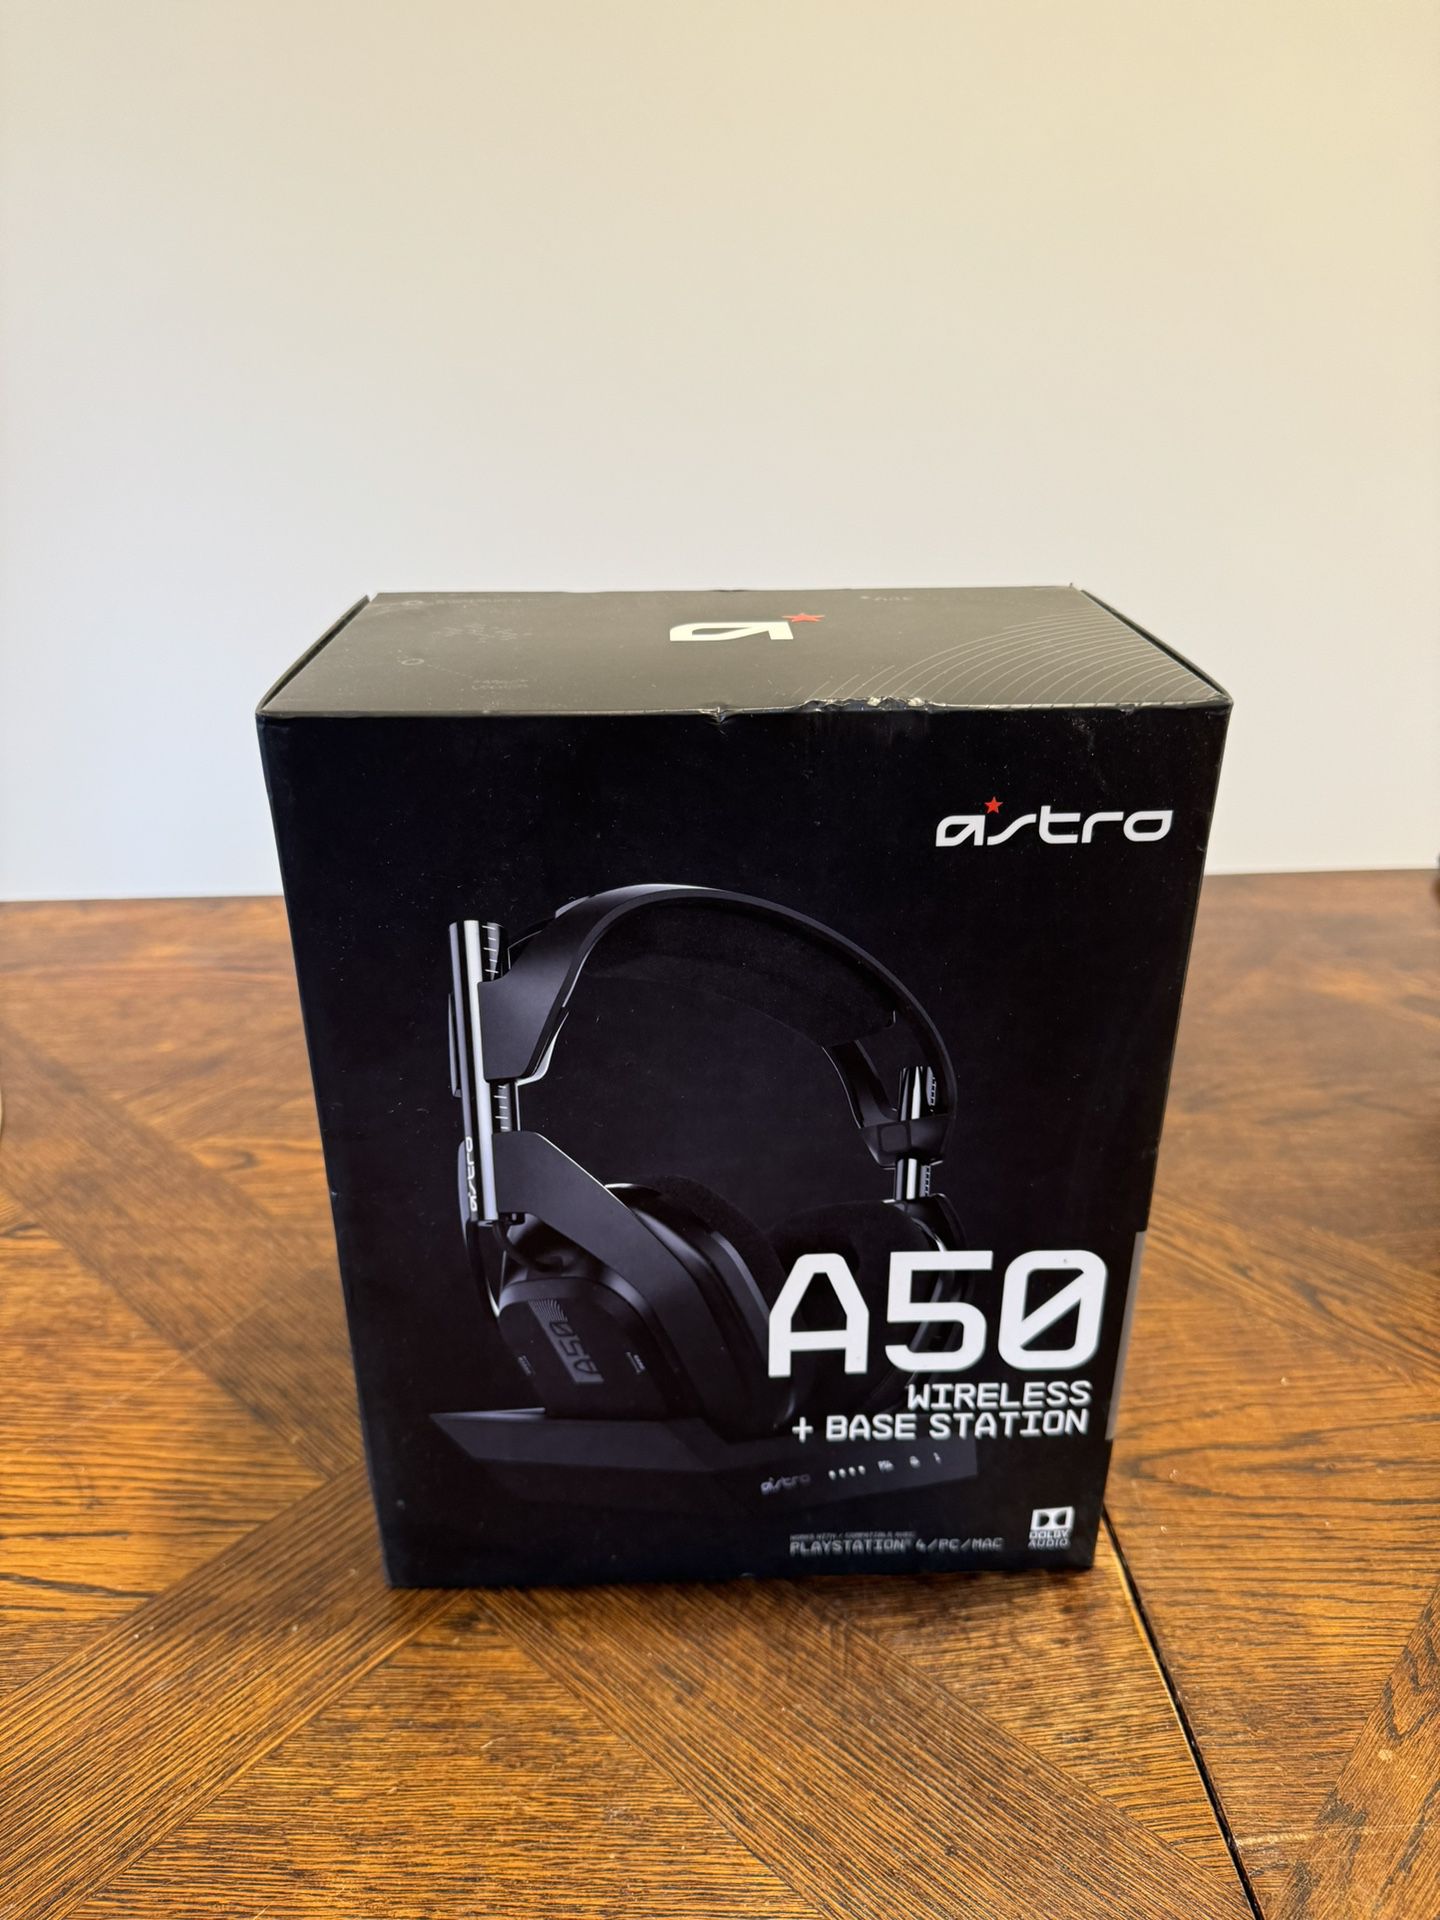 Astro A50 PS4 Edition